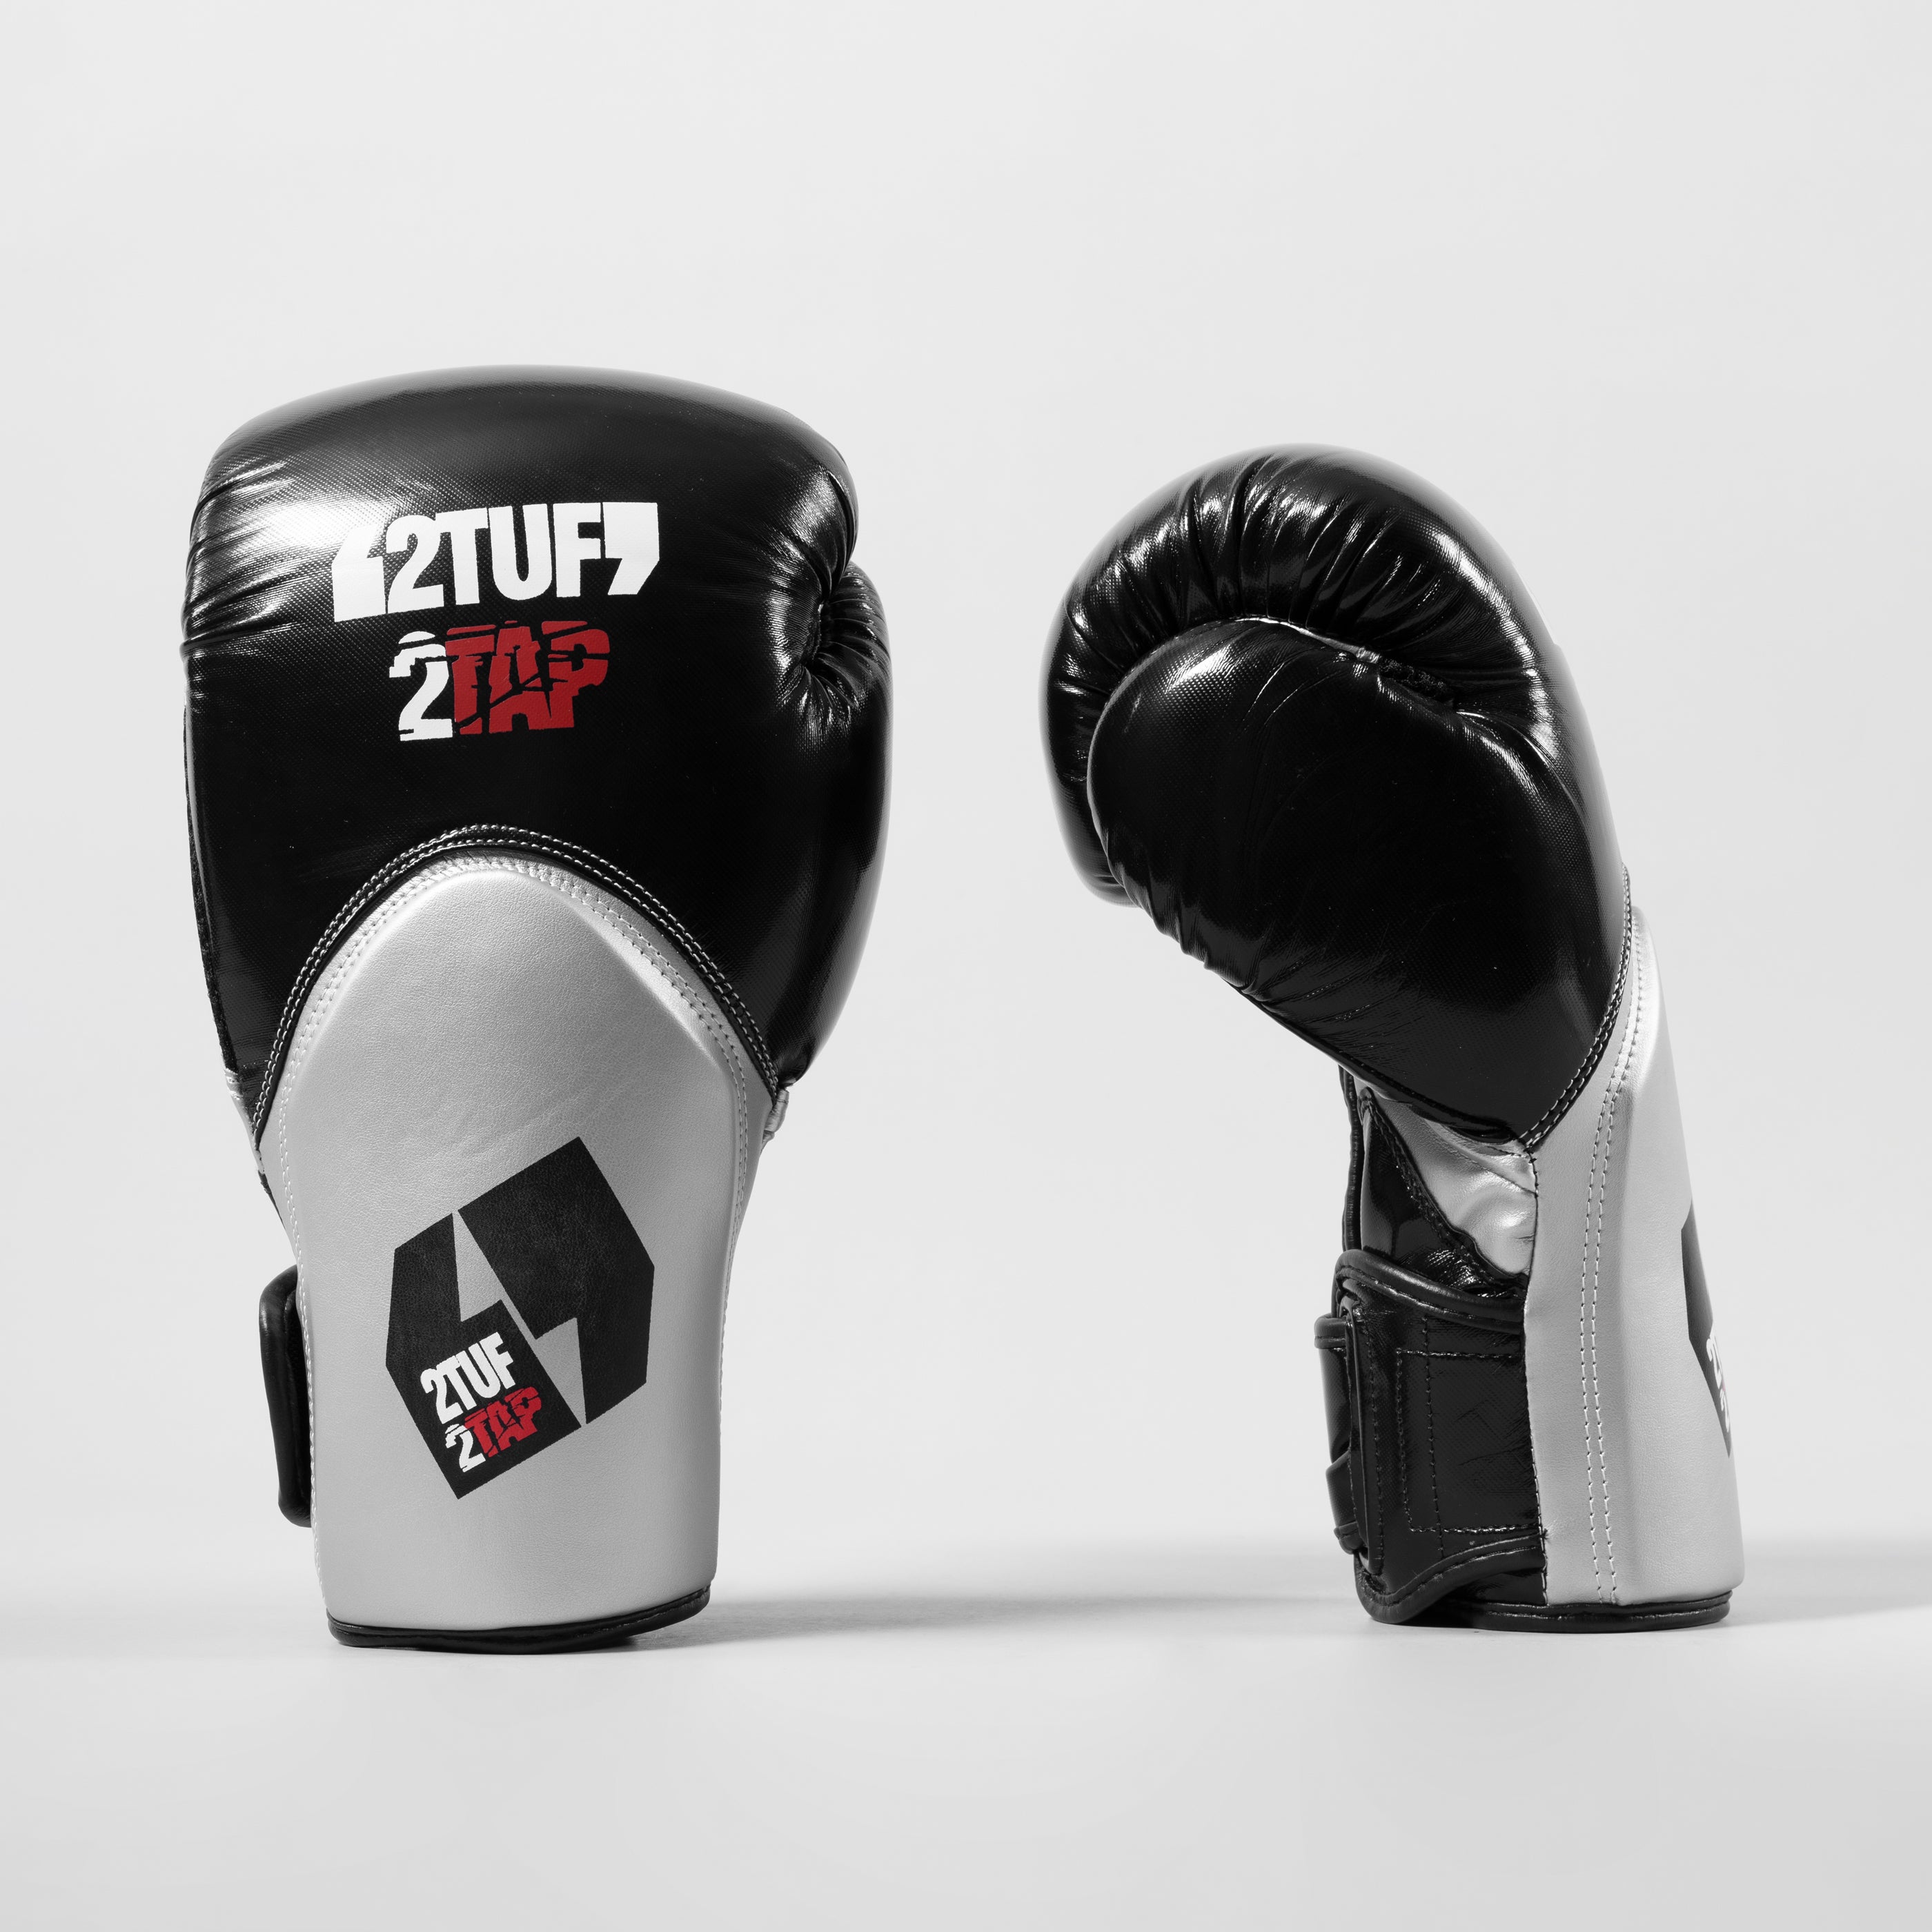 'Marauder' Boxing Gloves - Black/Silver 2TUF2TAP